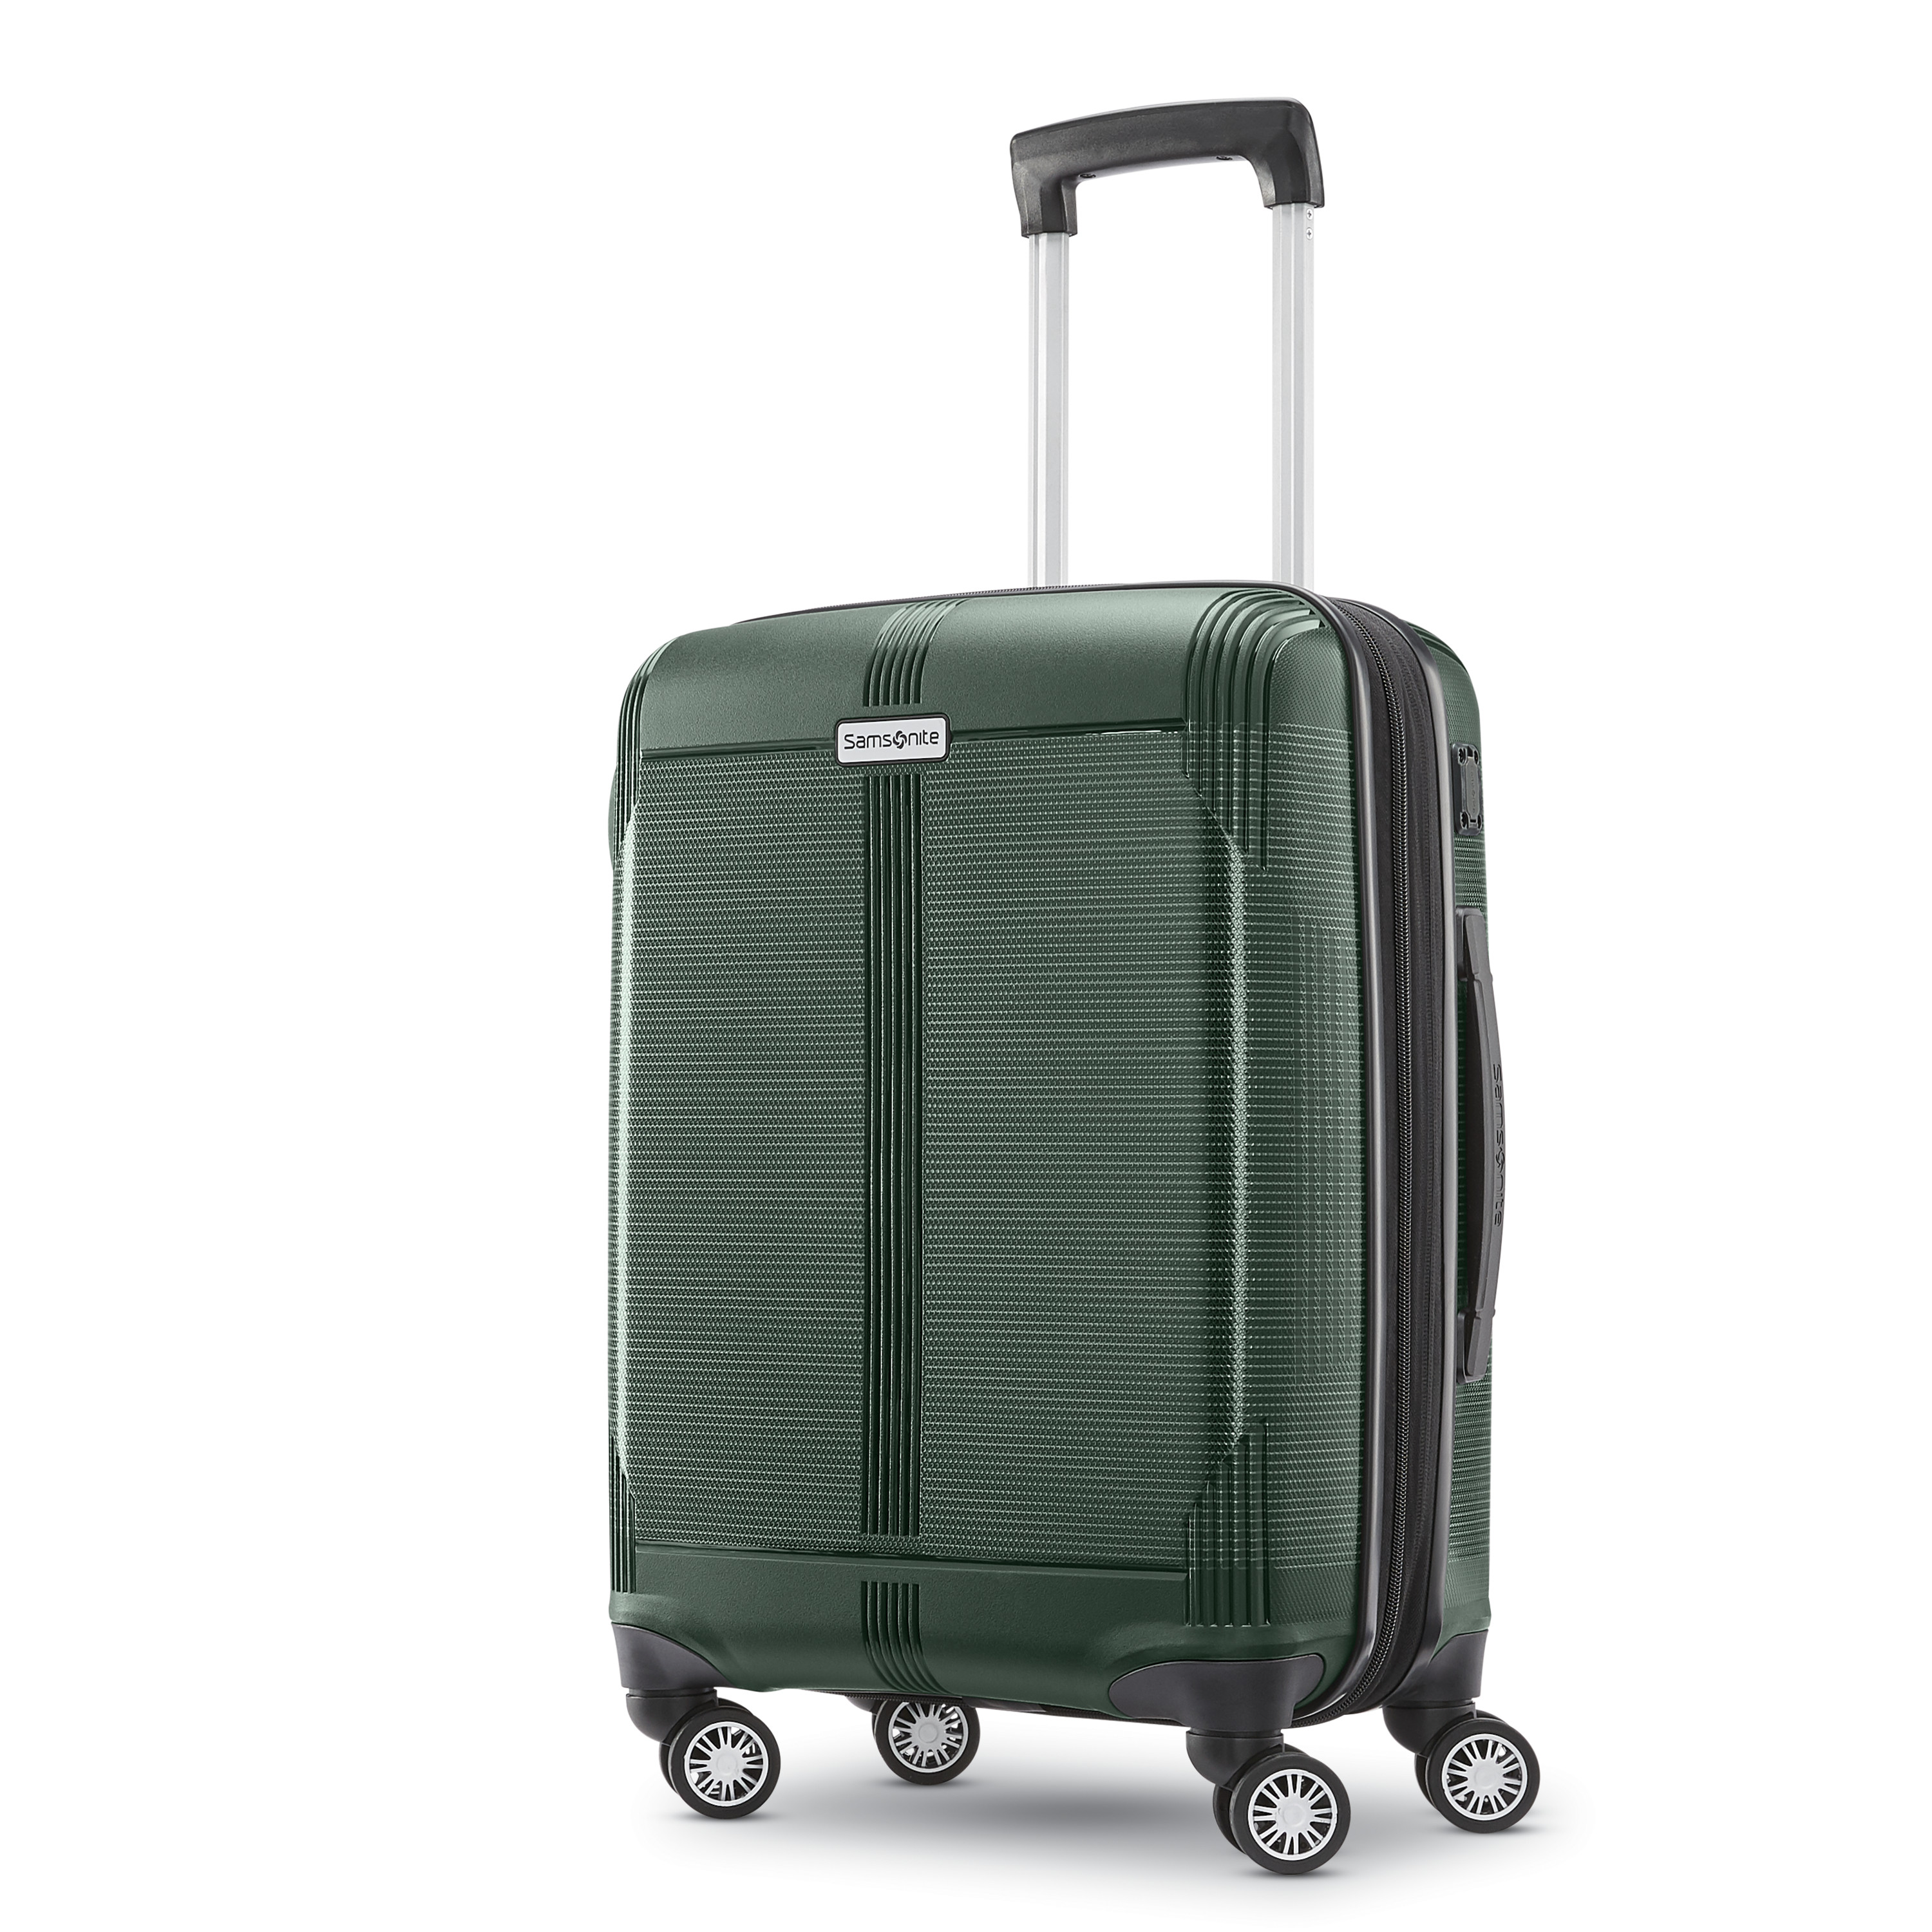 Samsonite Supra DLX Carry-On Spinner - Luggage